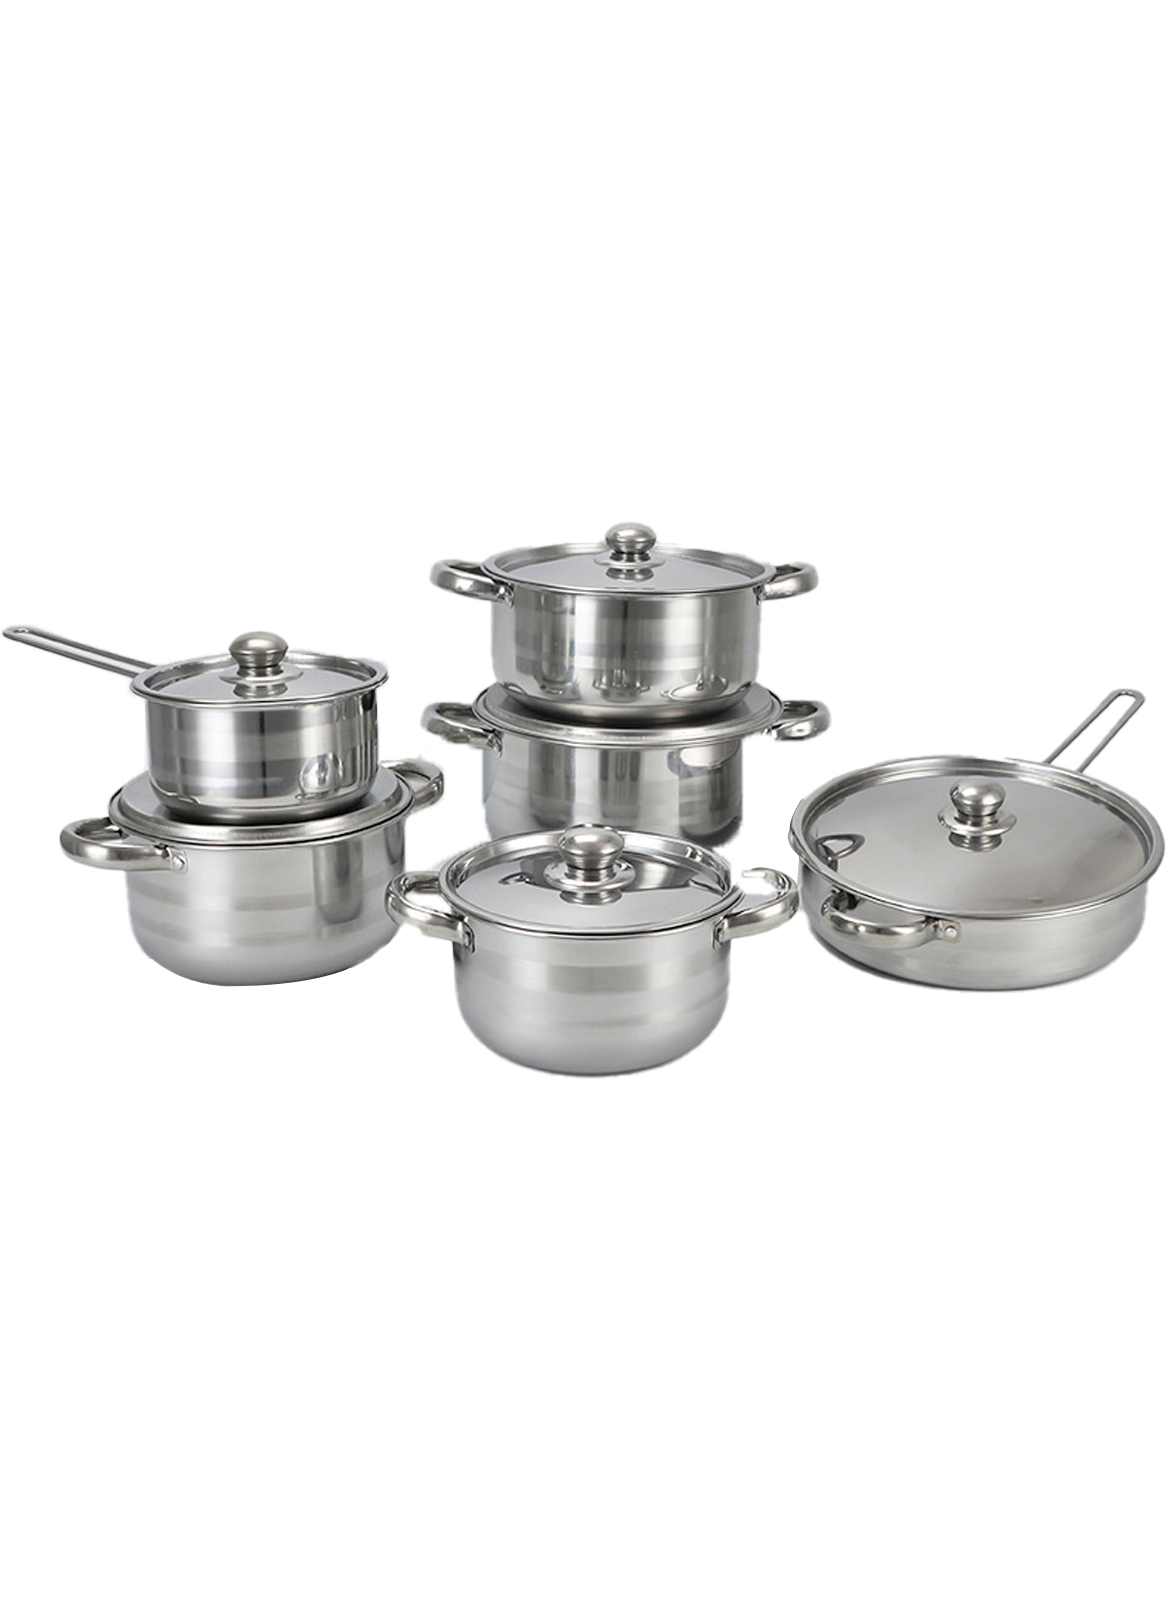 12 Piece Stainless Steel Stock Pot Frying Pan Cookware Set